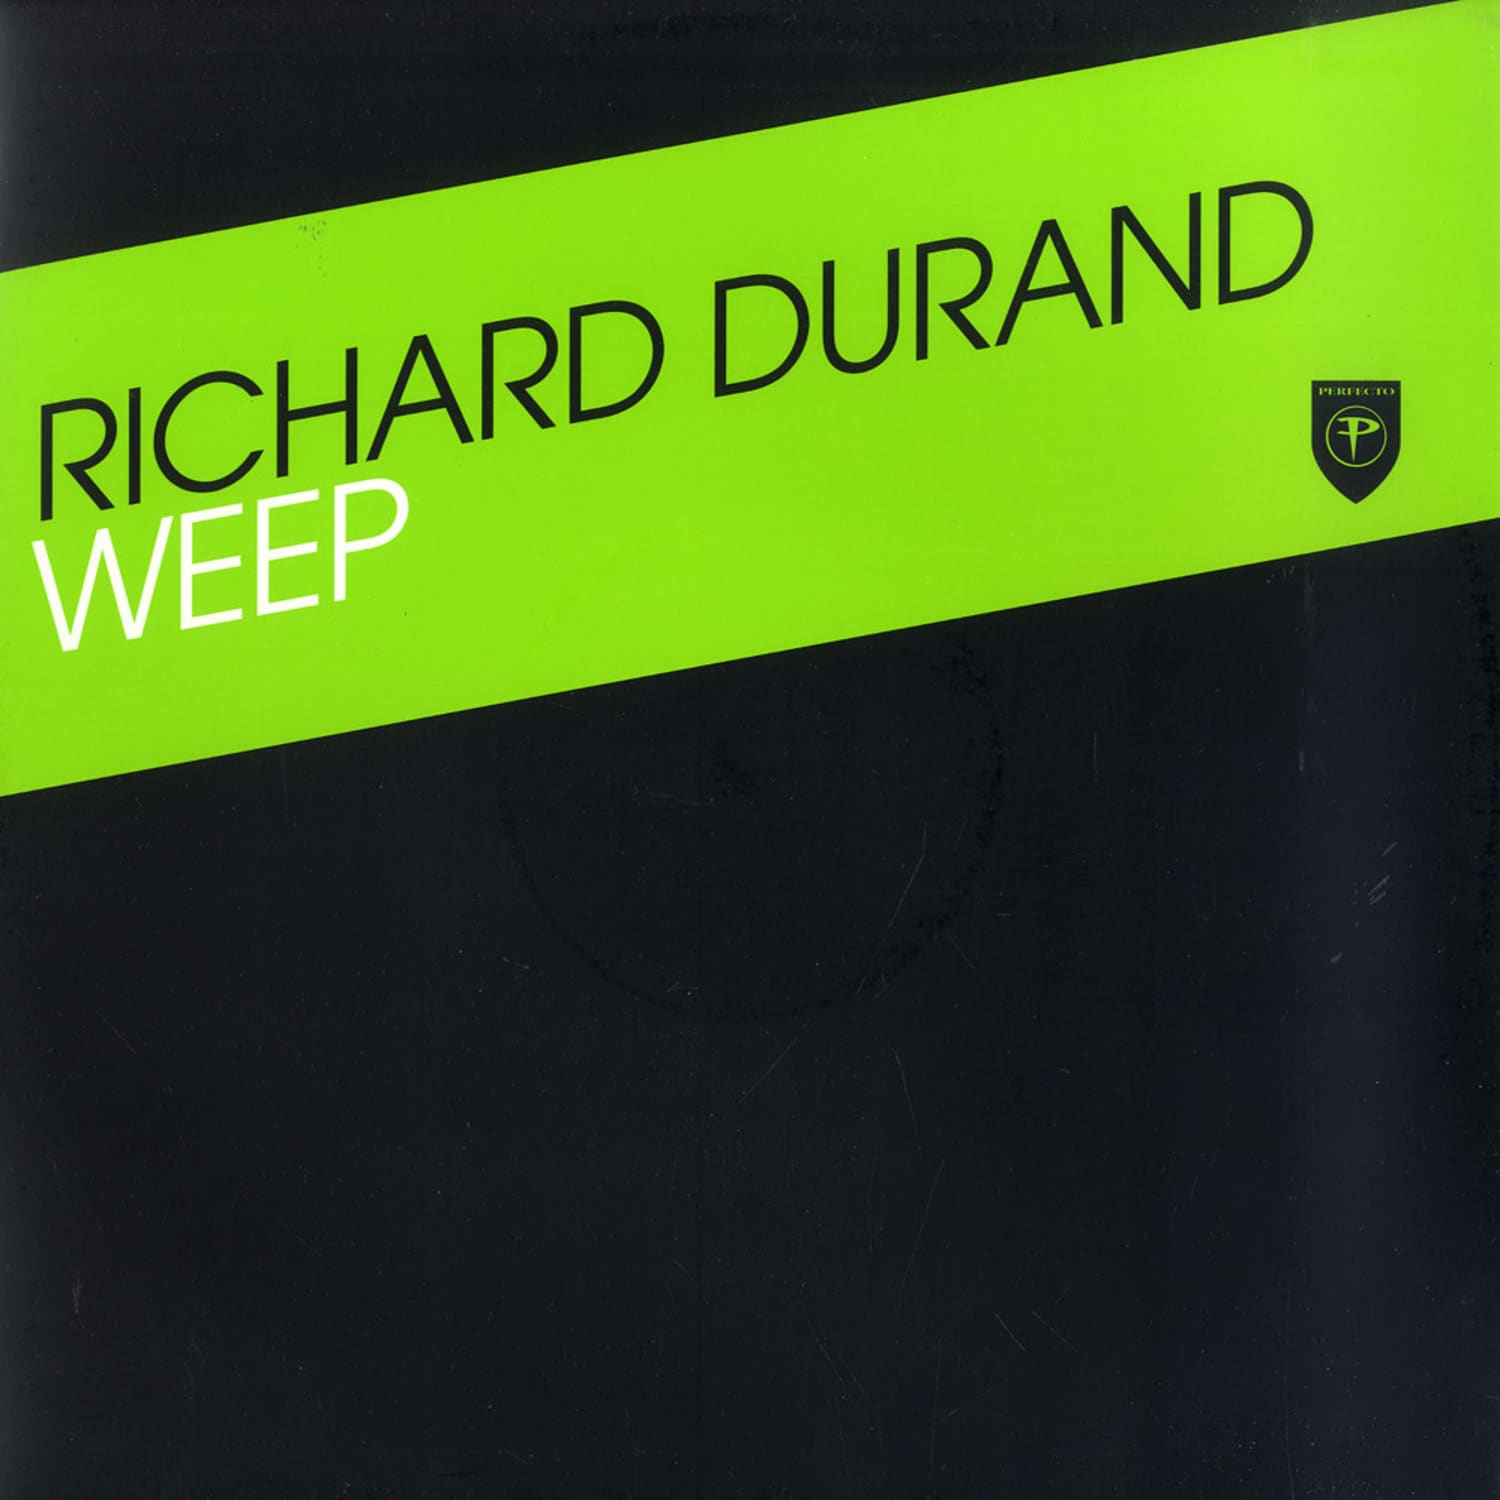 Richard Durand - WEEP